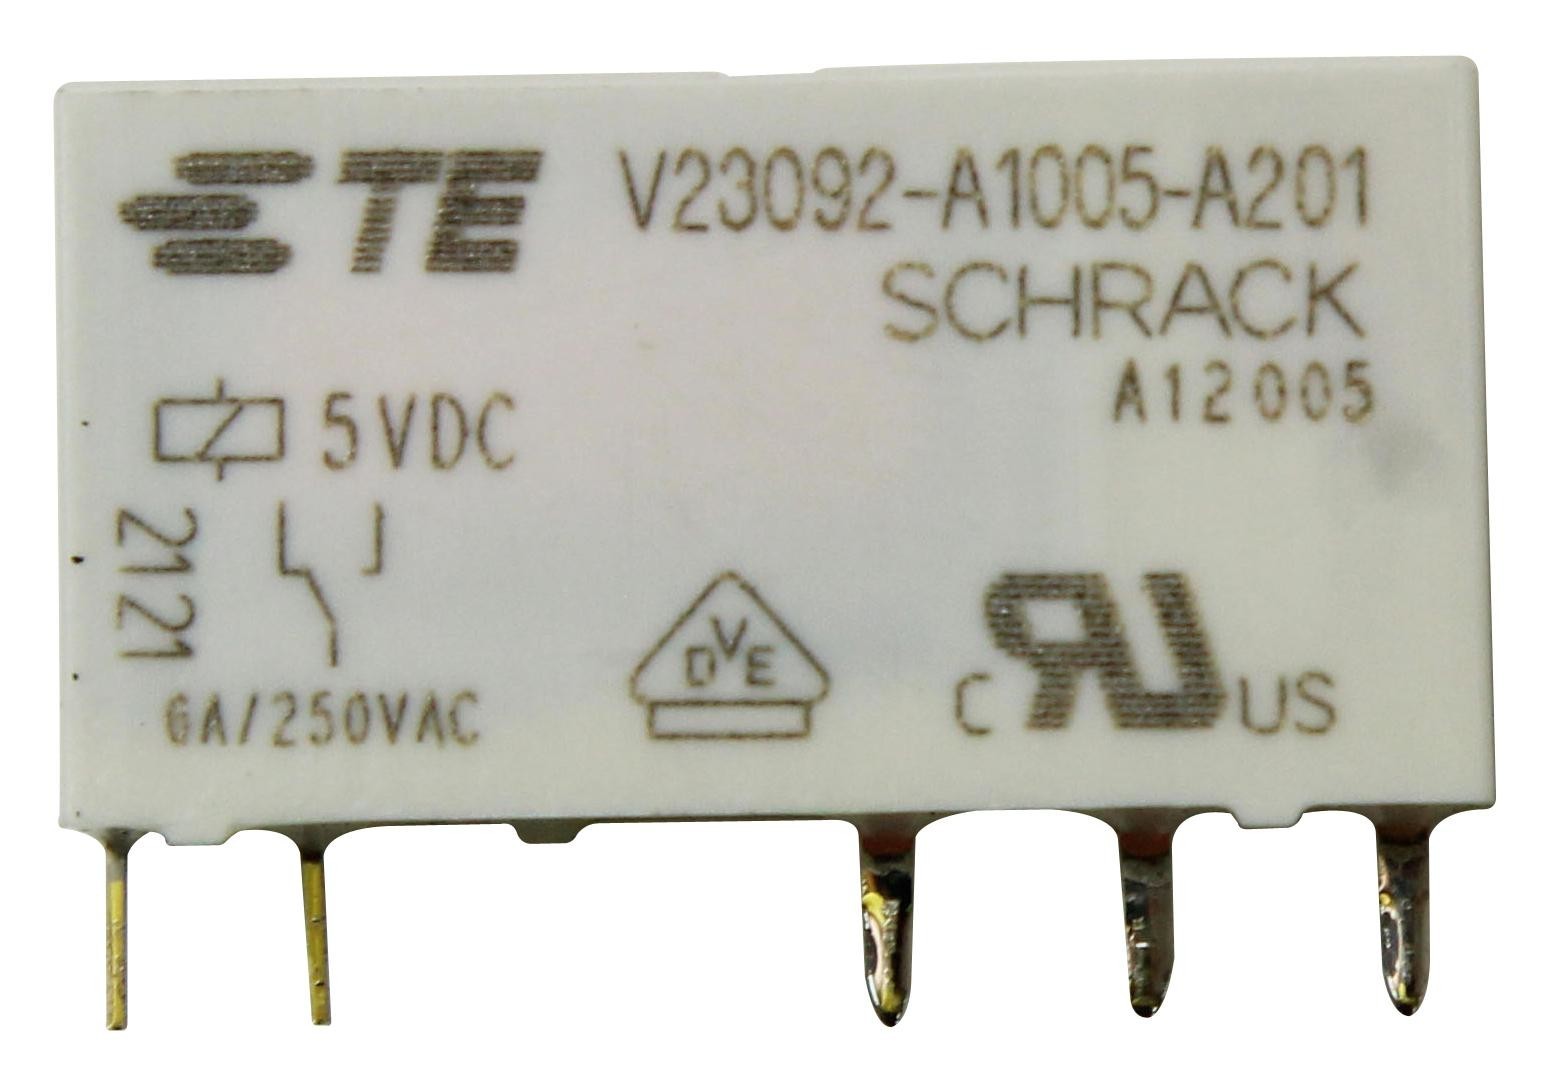 Schrack / Te Connectivity 1393236-1 Power Relay, Spdt, 5Vdc, 6A, Tht